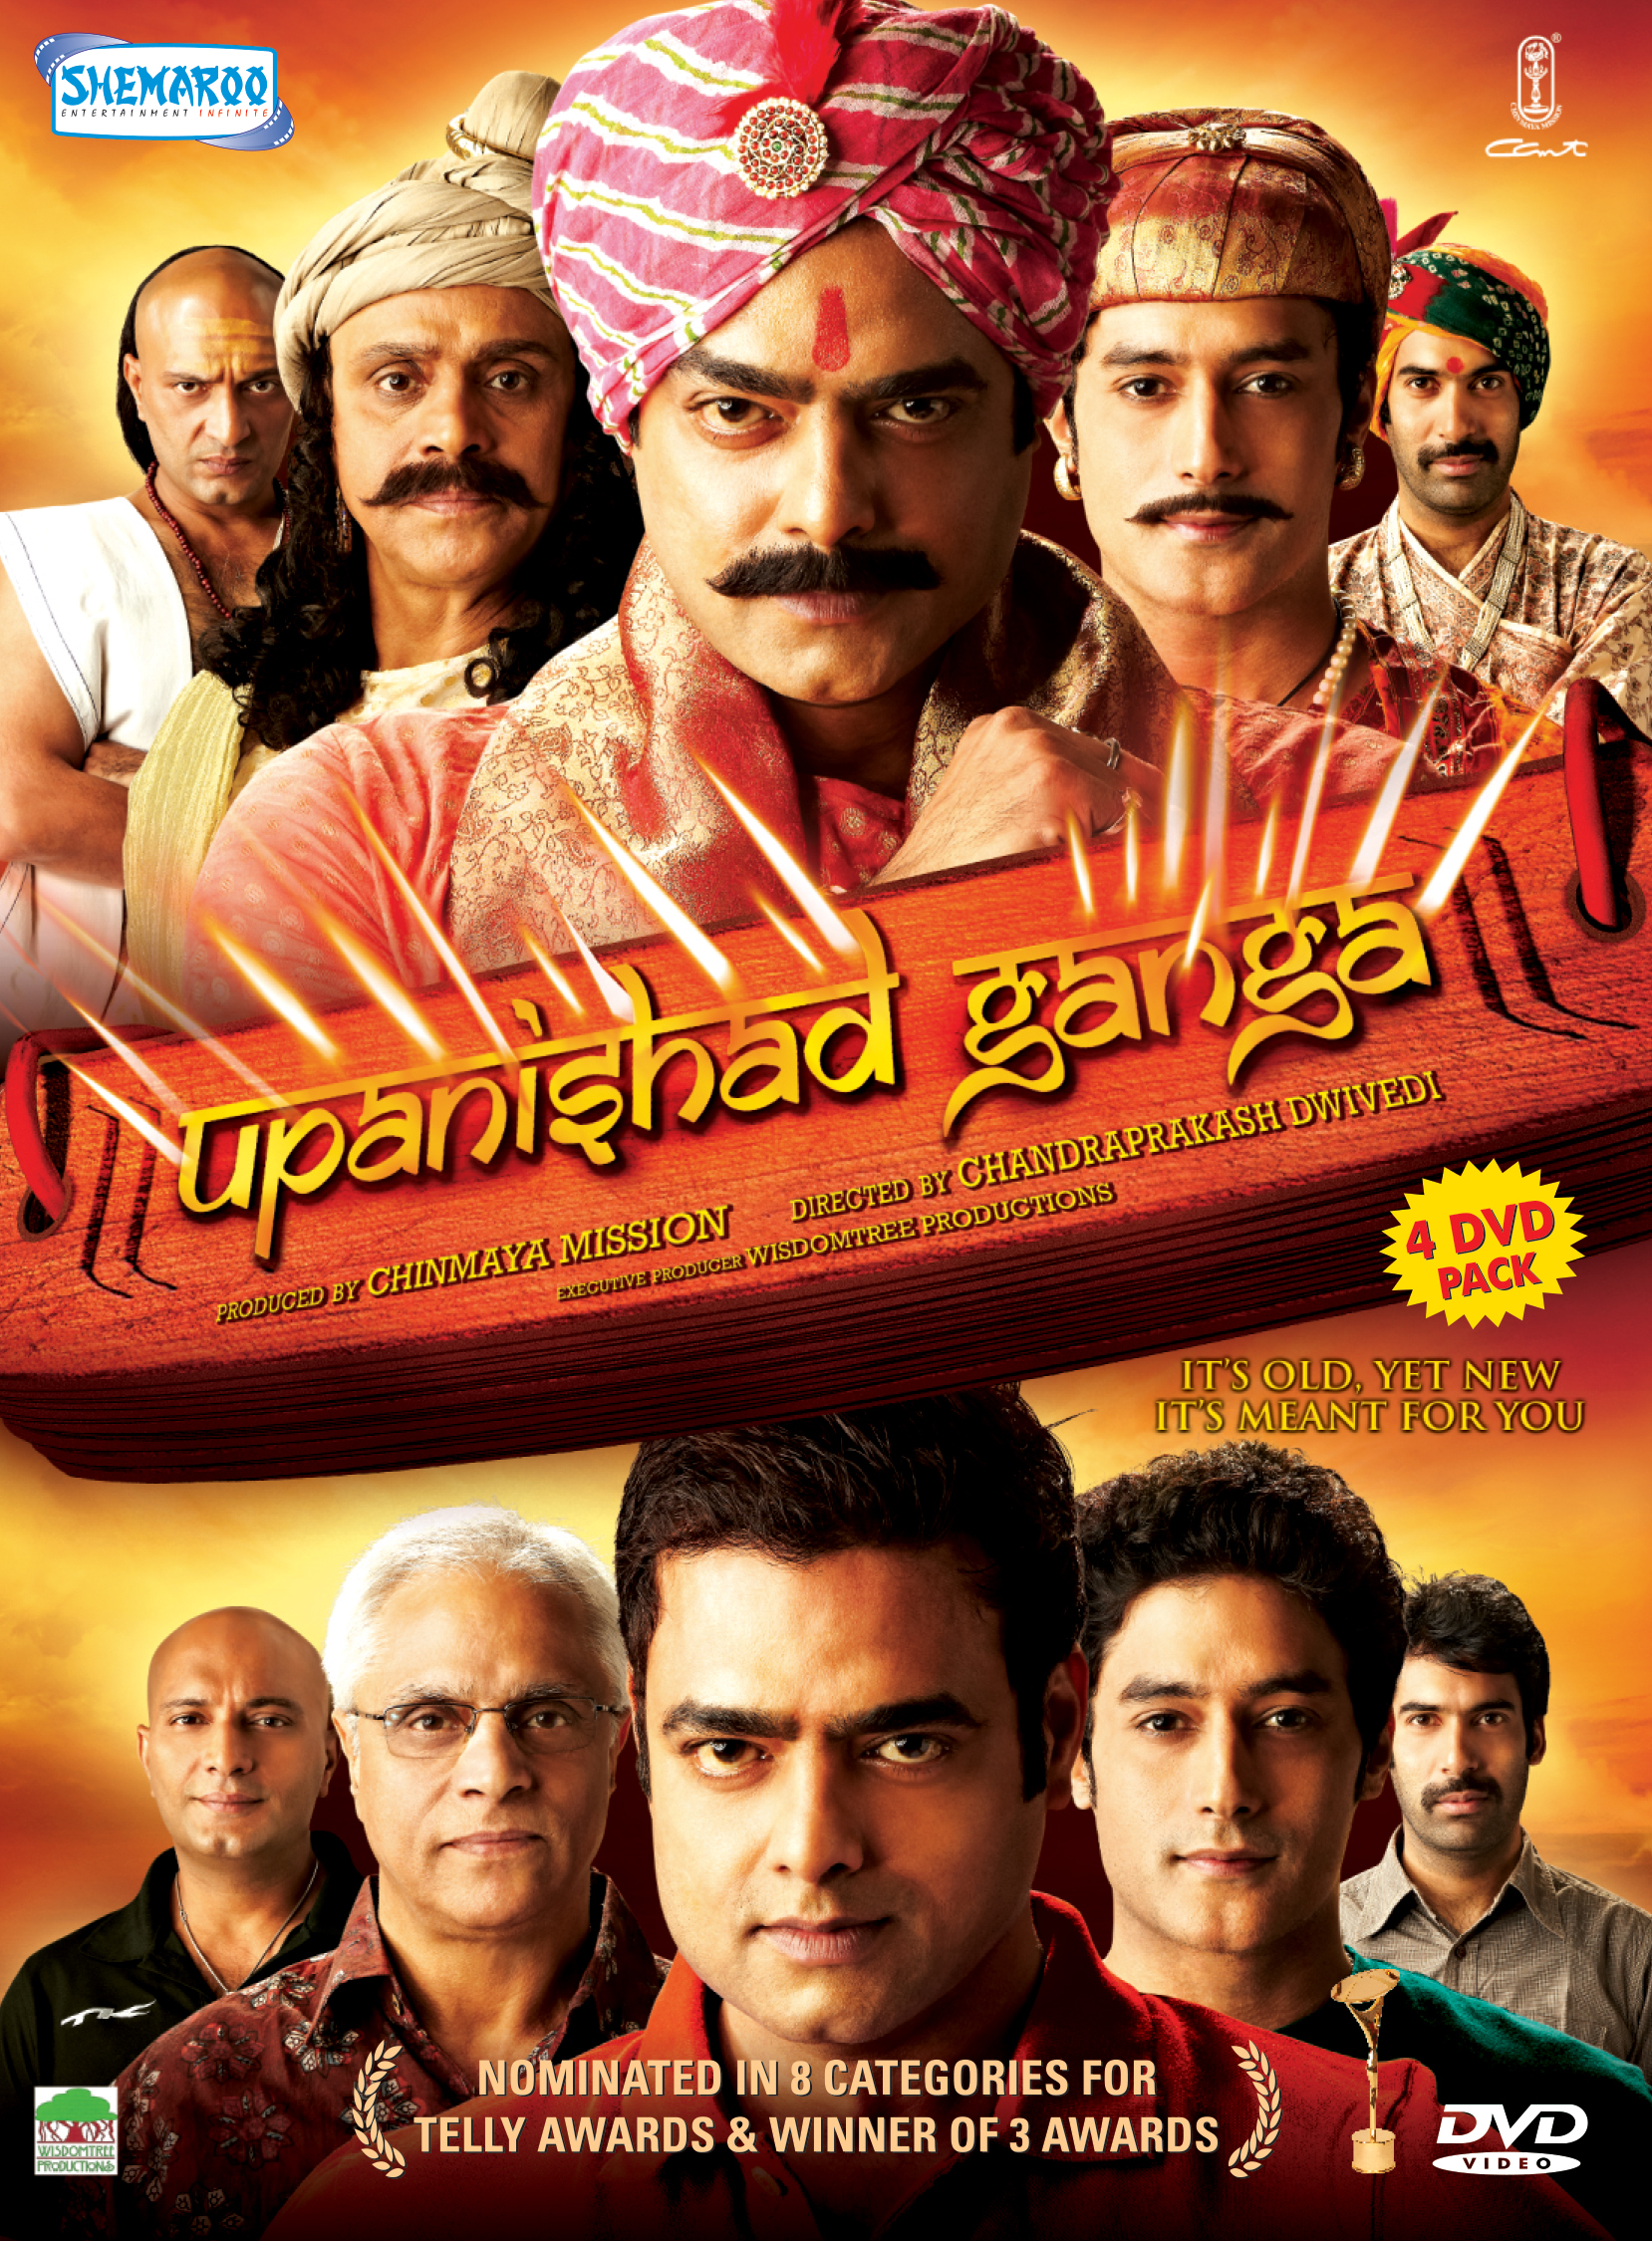 Upanishad Ganga Vol 2 of 4 (DVD - Hindi Show with English Subtitles)